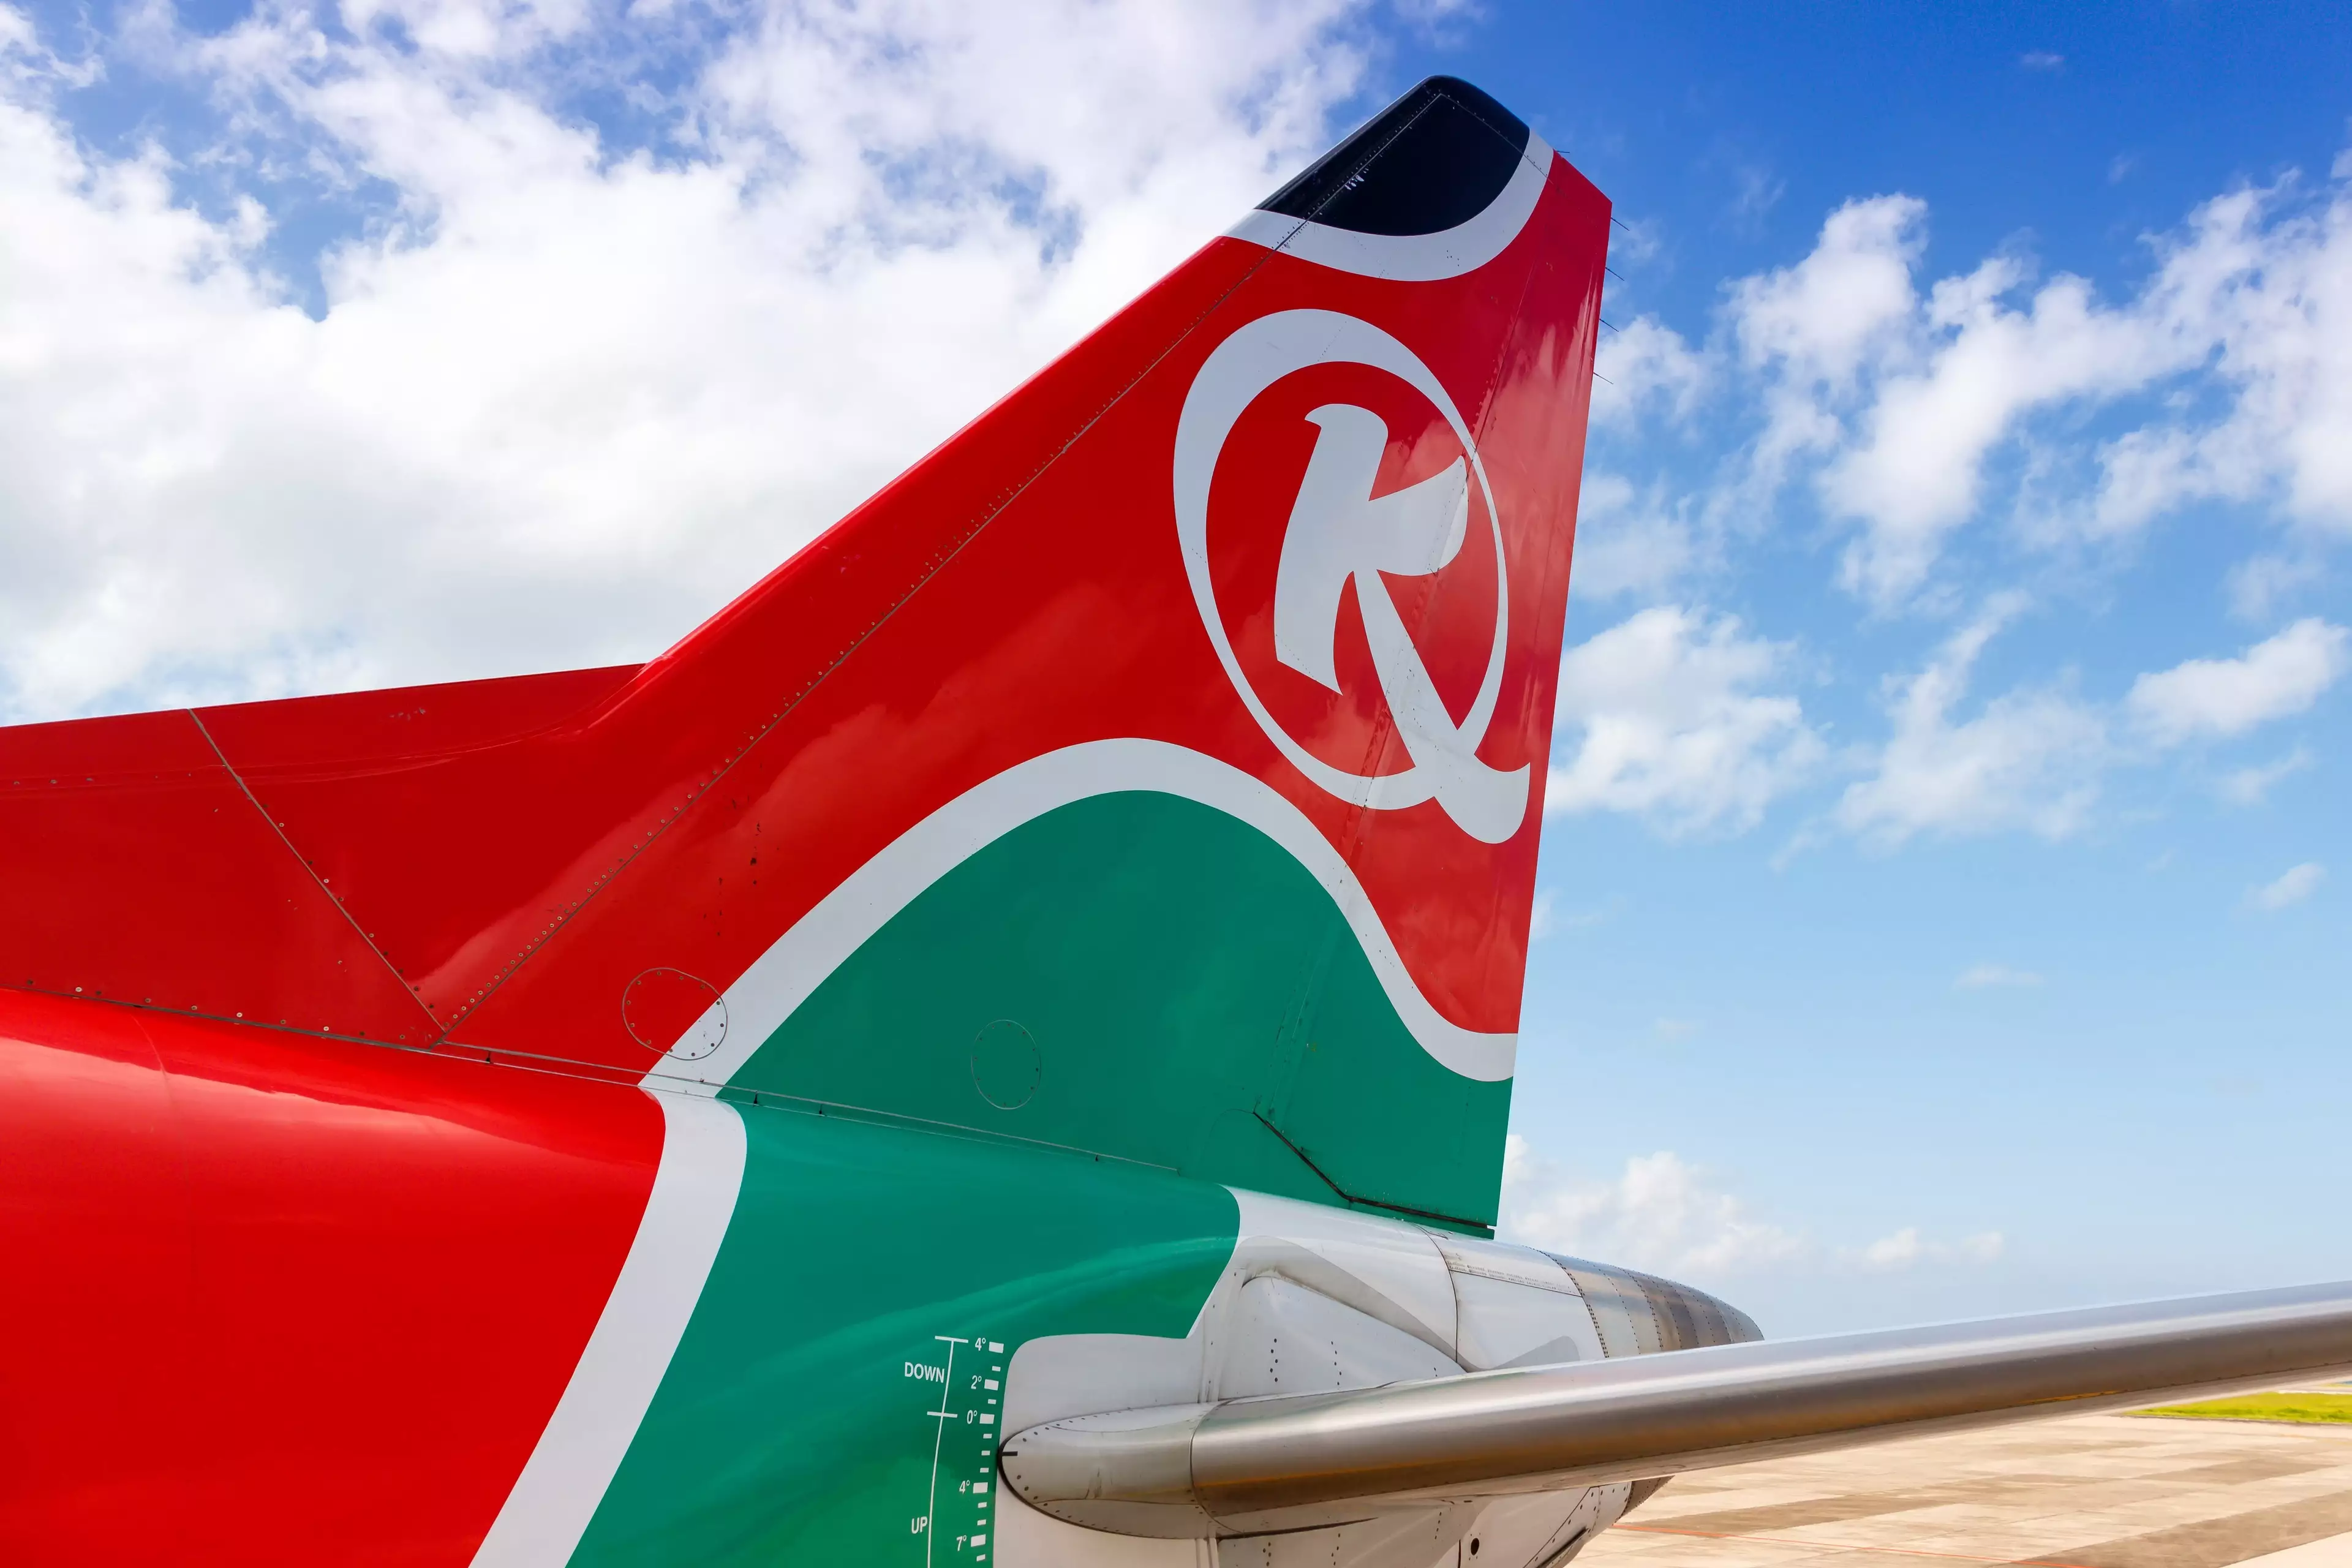 The tail of a Kenya Airways aeroplane.